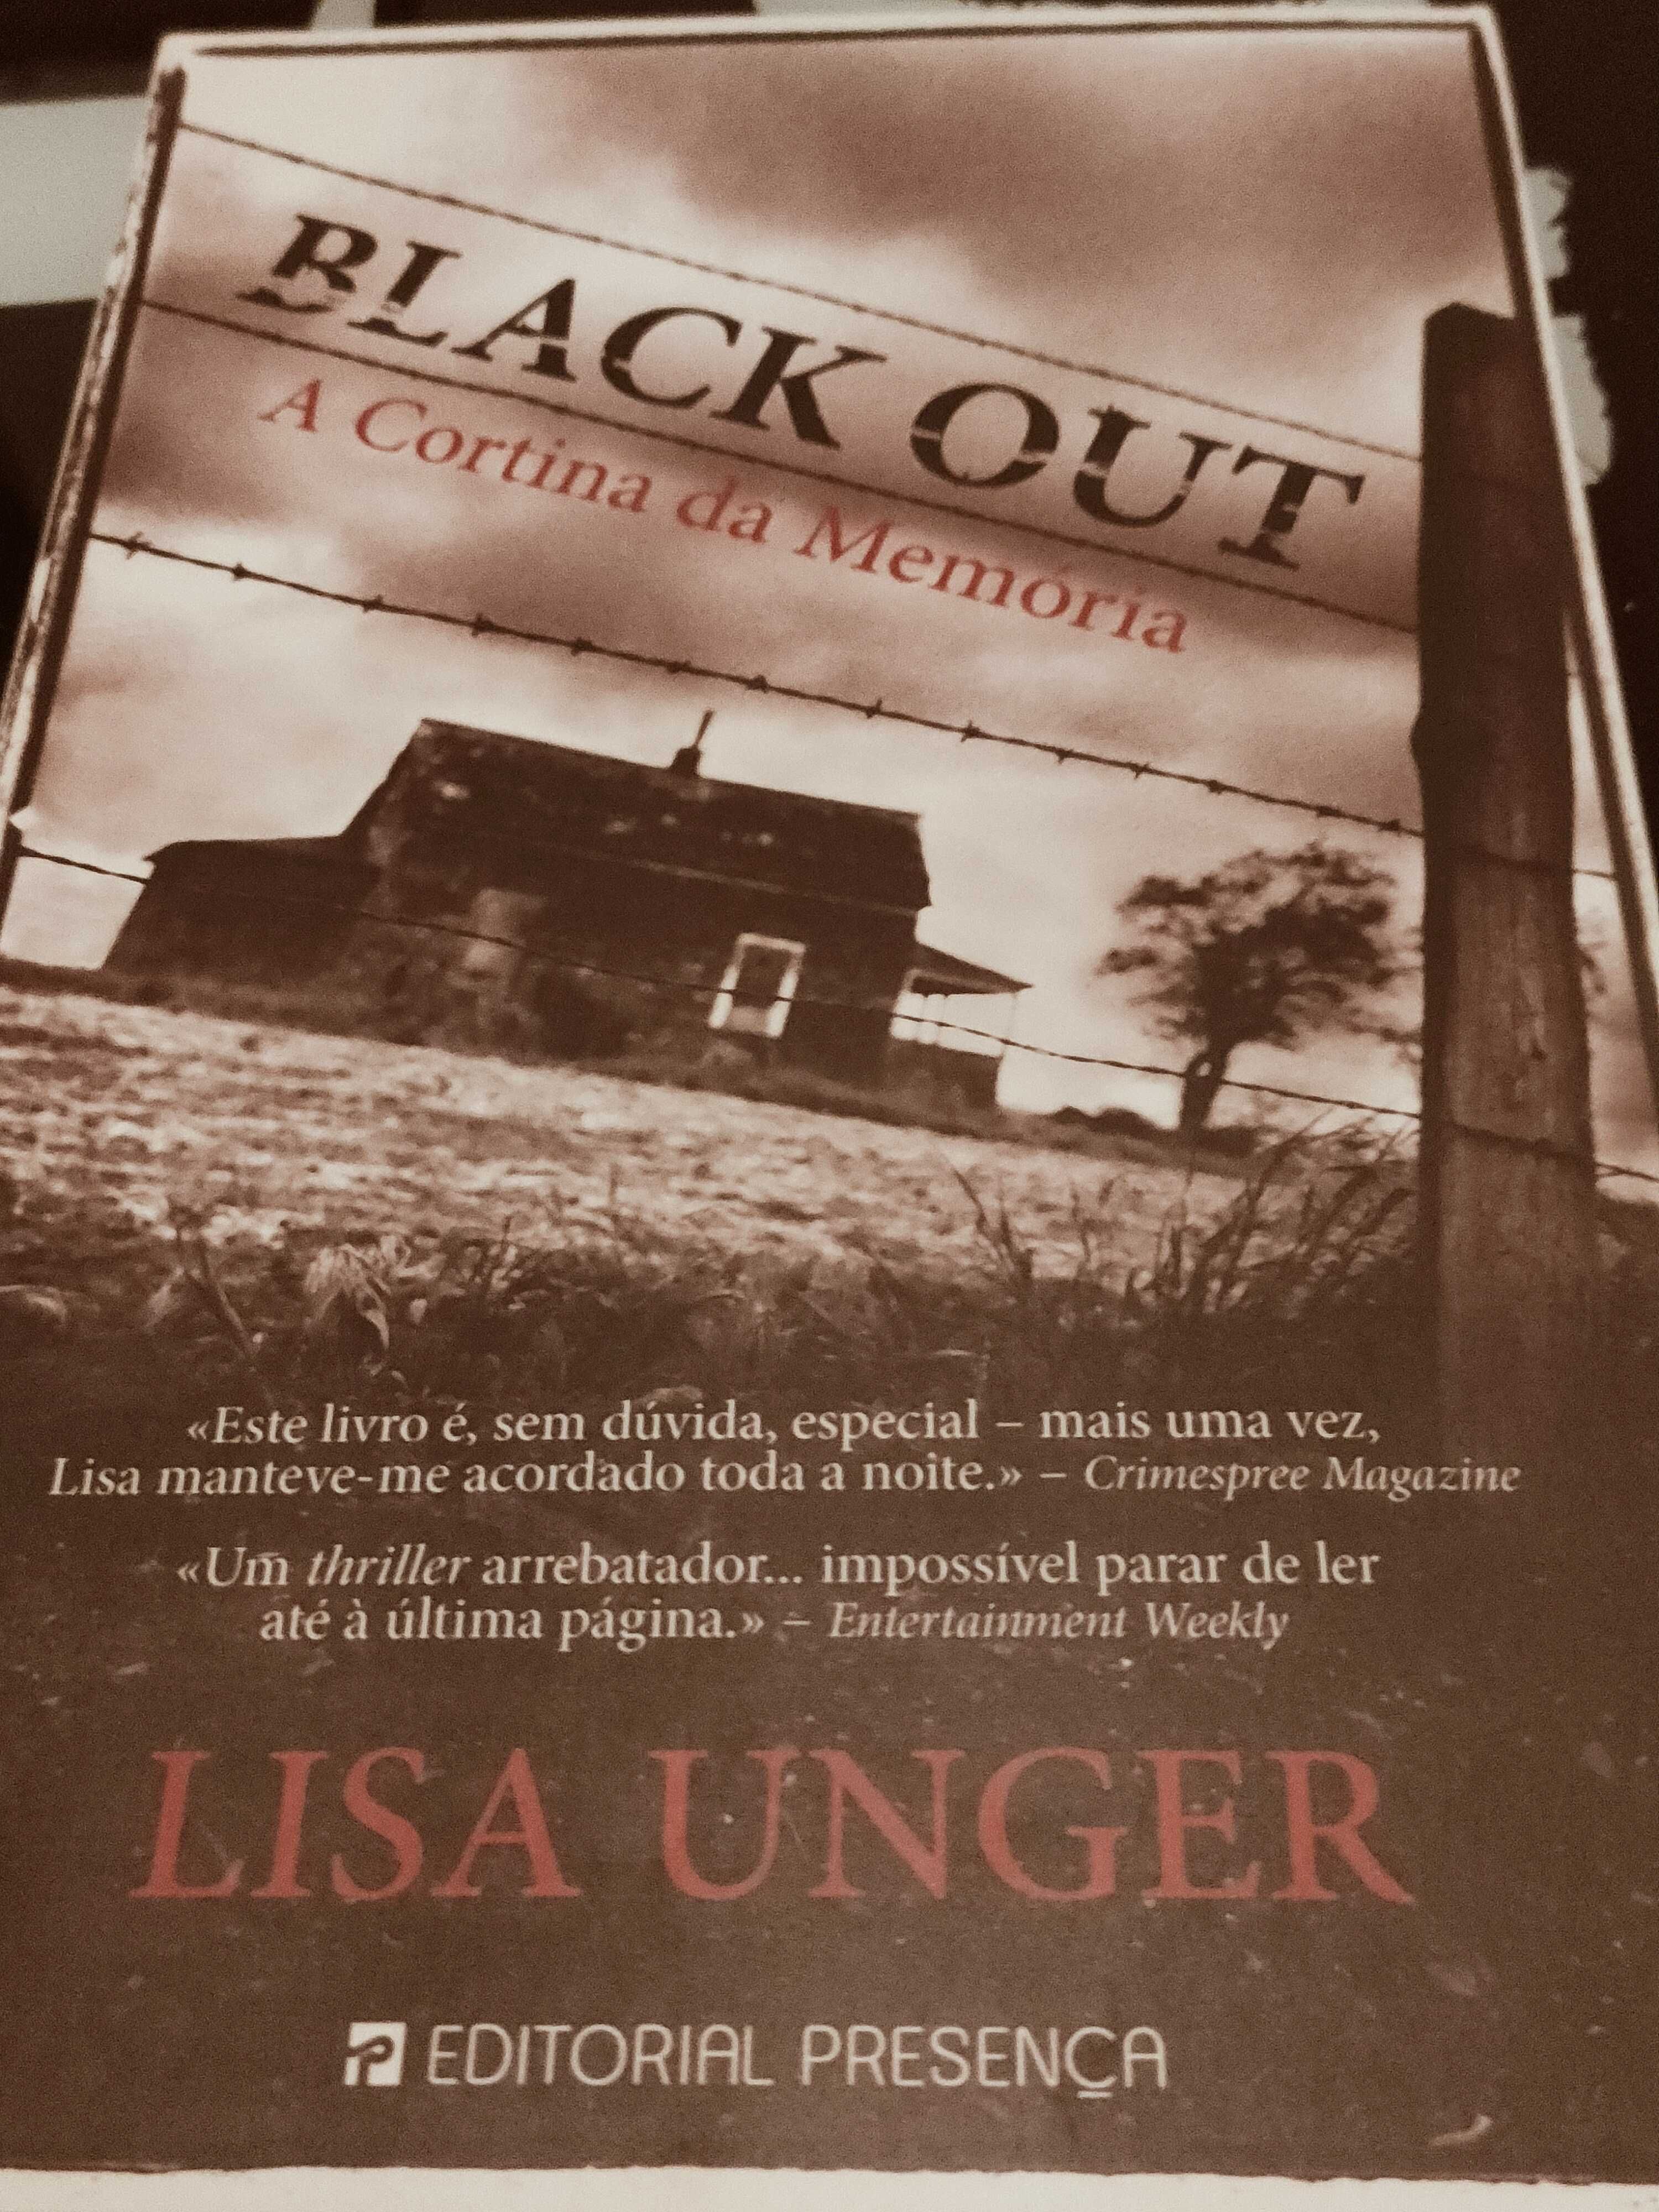 Livro novo Blackout de Lisa Unger